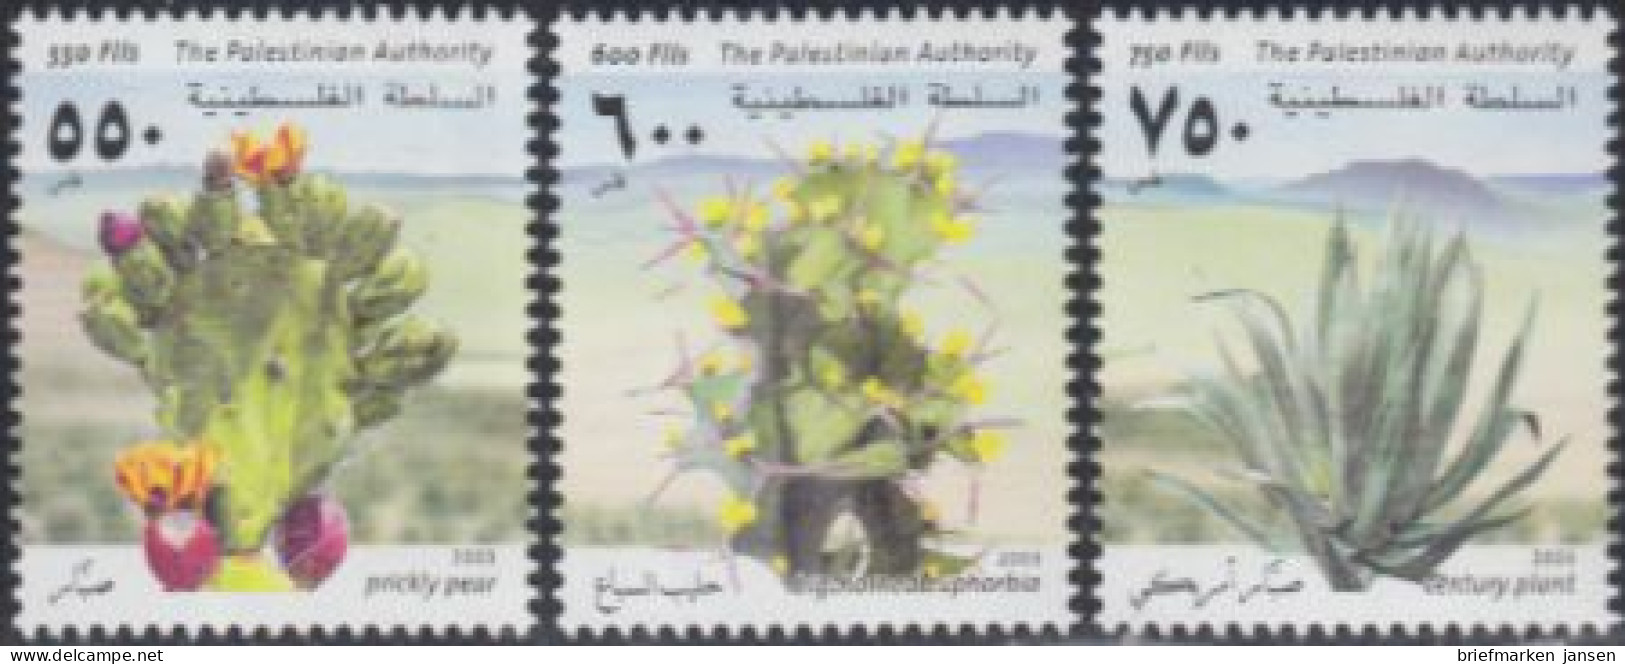 Palästina Mi.Nr. 204-06 Flora, Opuntie, Euphorbia, Agave (3 Werte) - Palestine